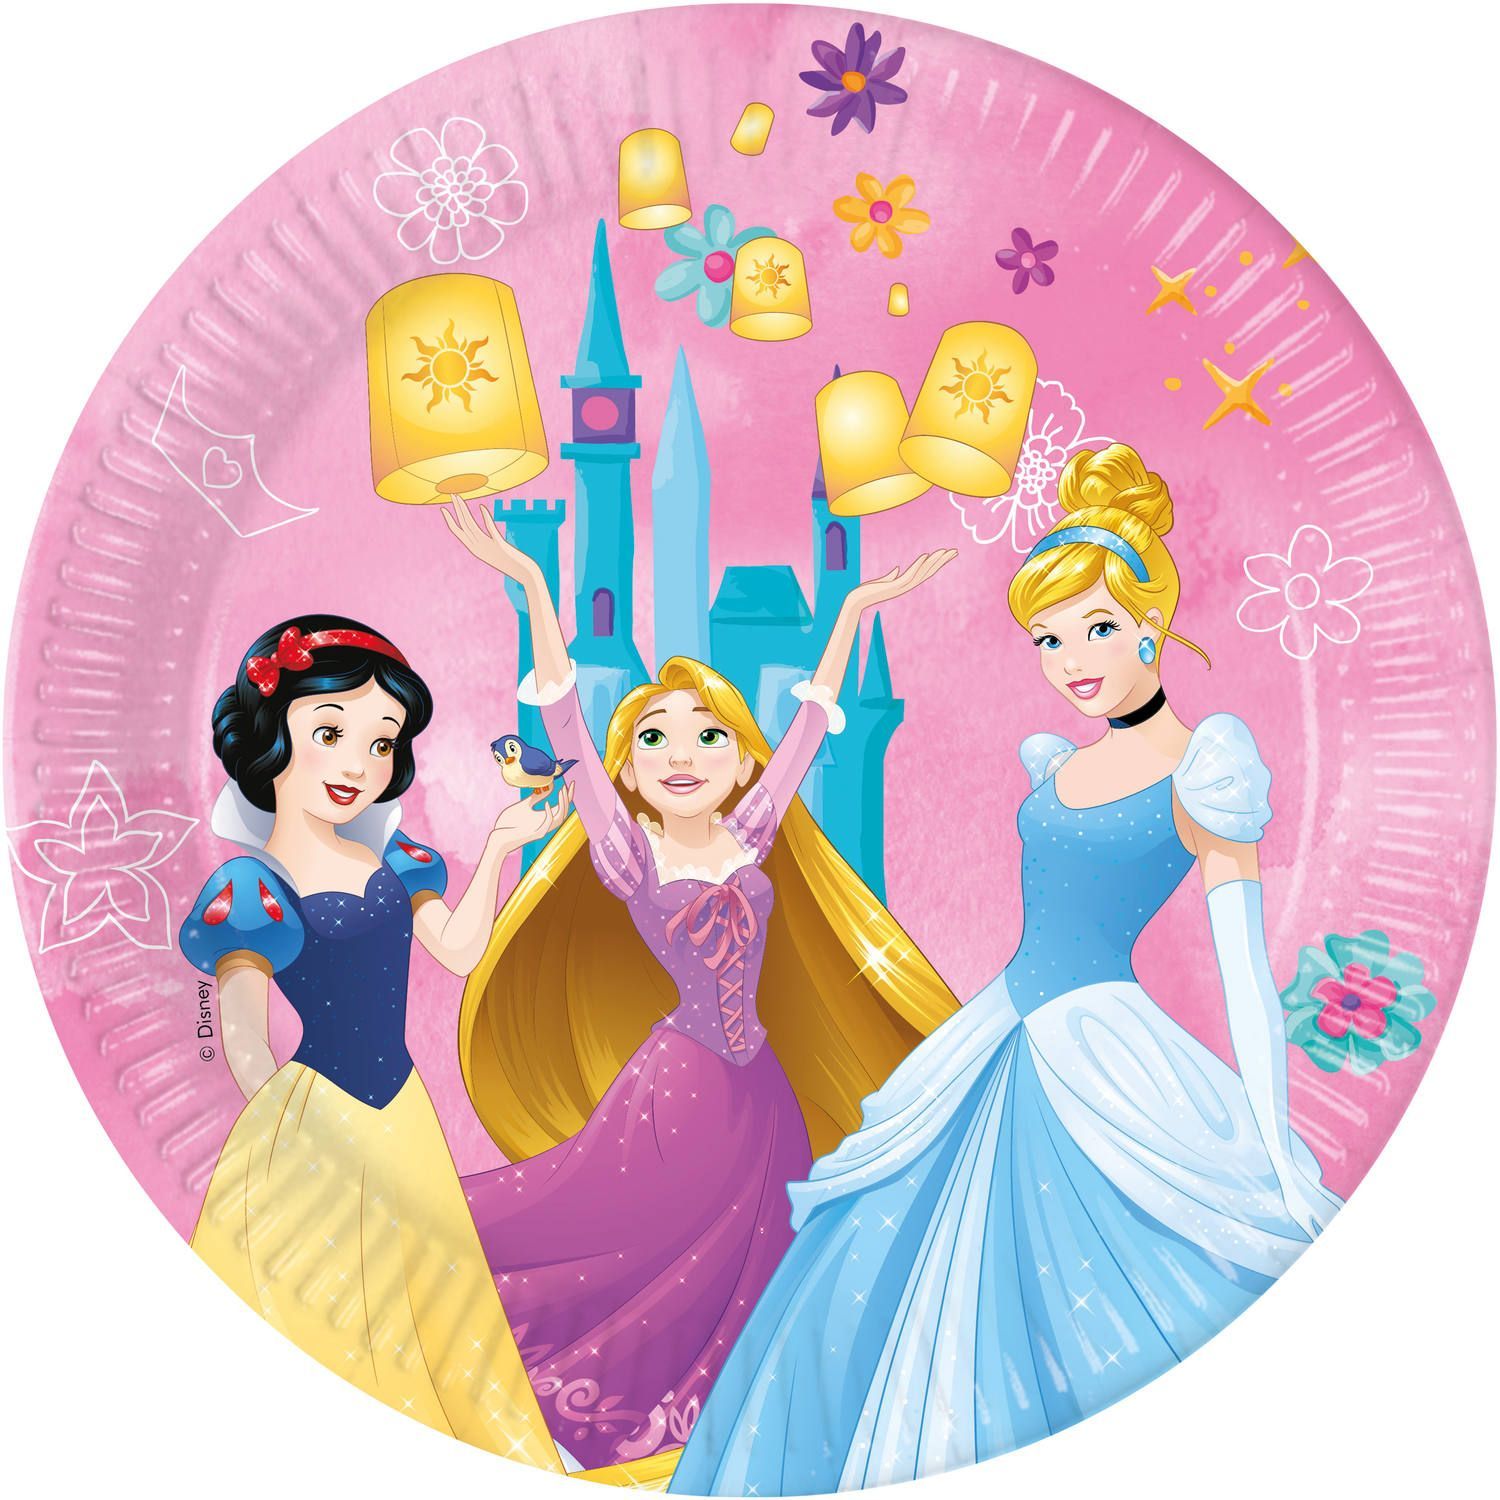 Disney prinsessen kinderfeestje bordjes 8 stuks